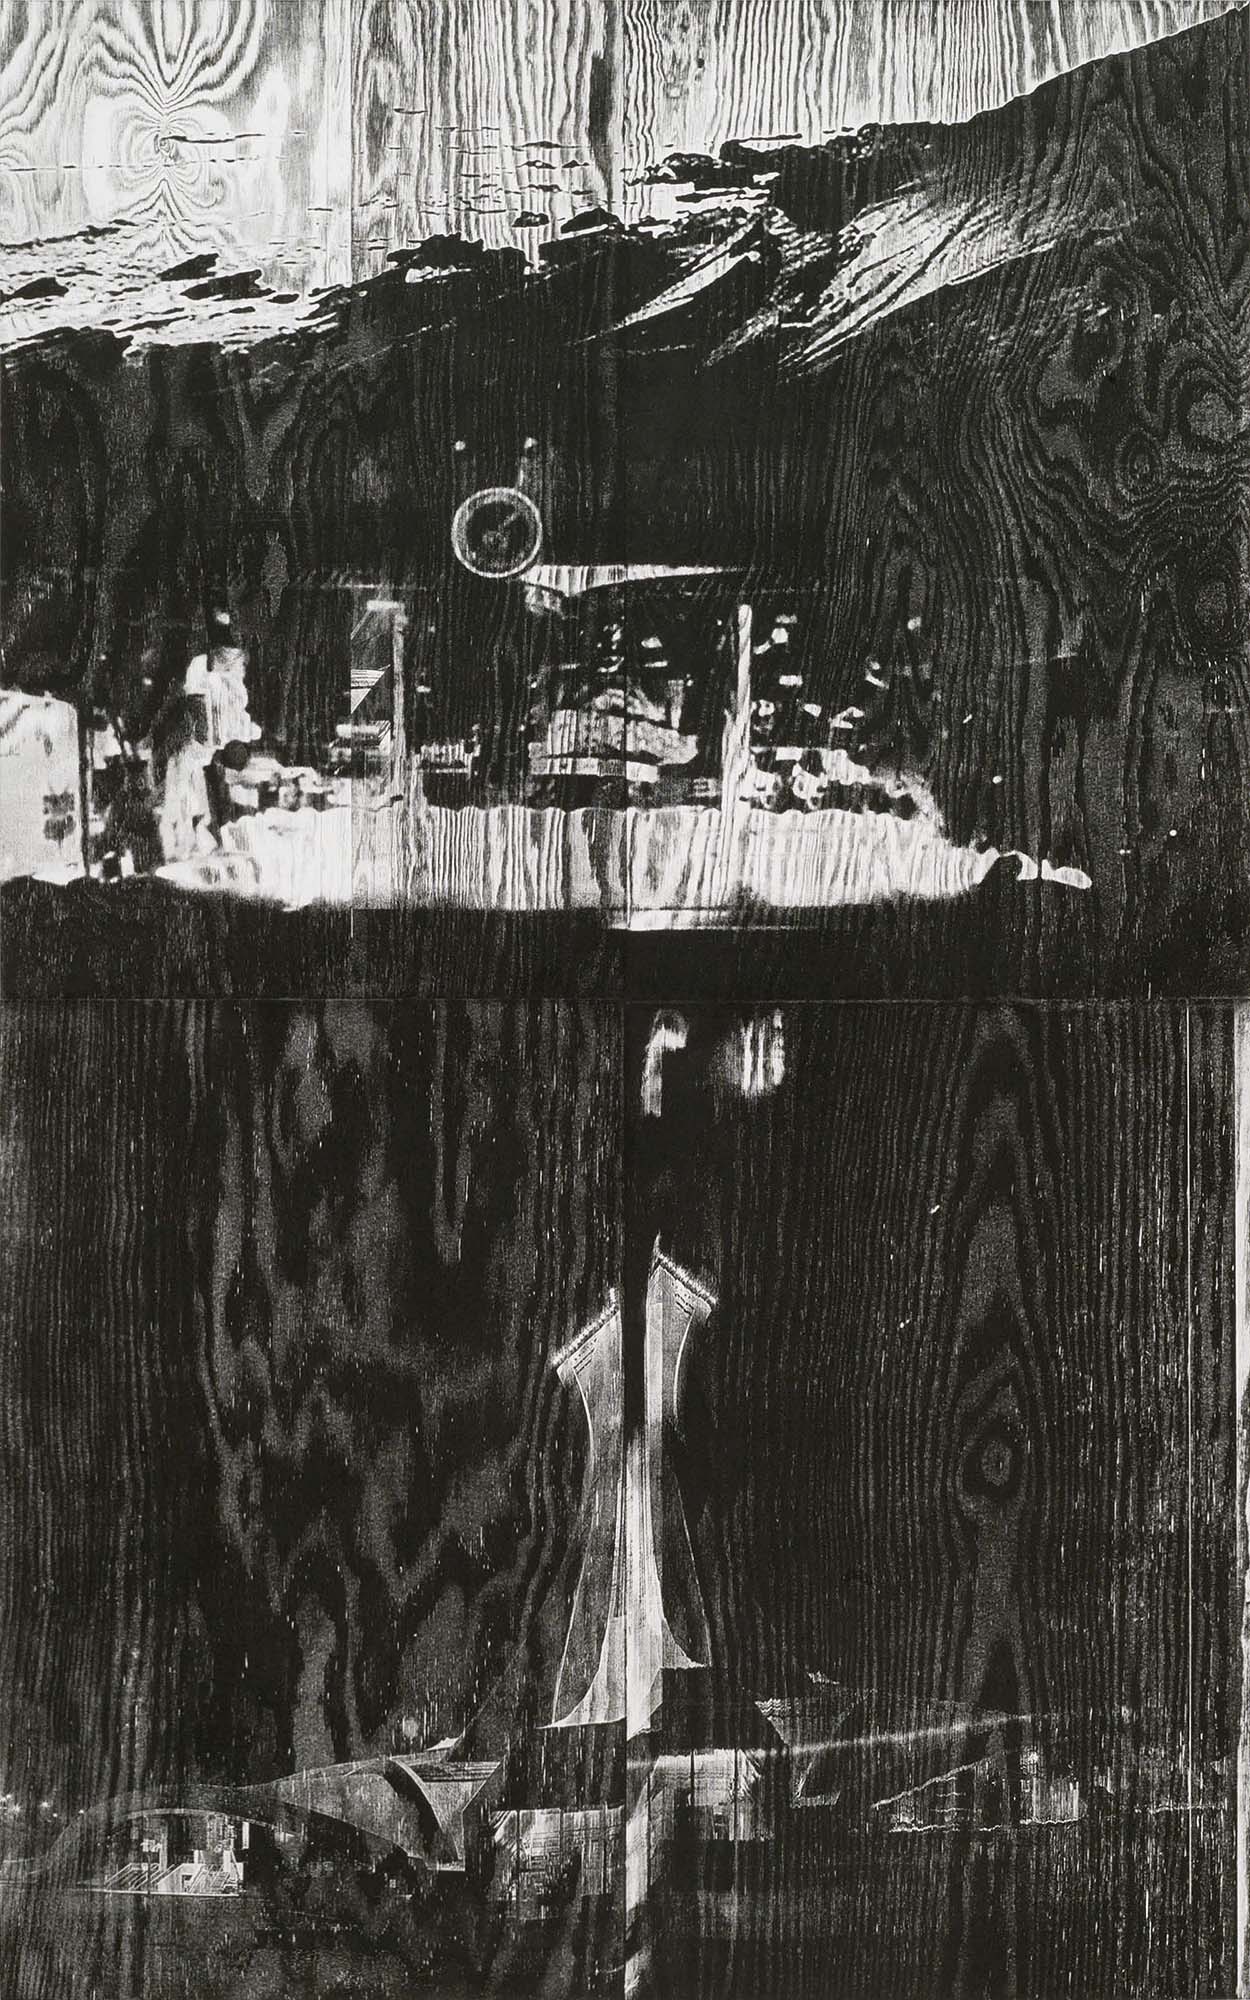 White Elephant, 2010, wood engraving (pine), 170 x 110 cm, Genaro Strobel